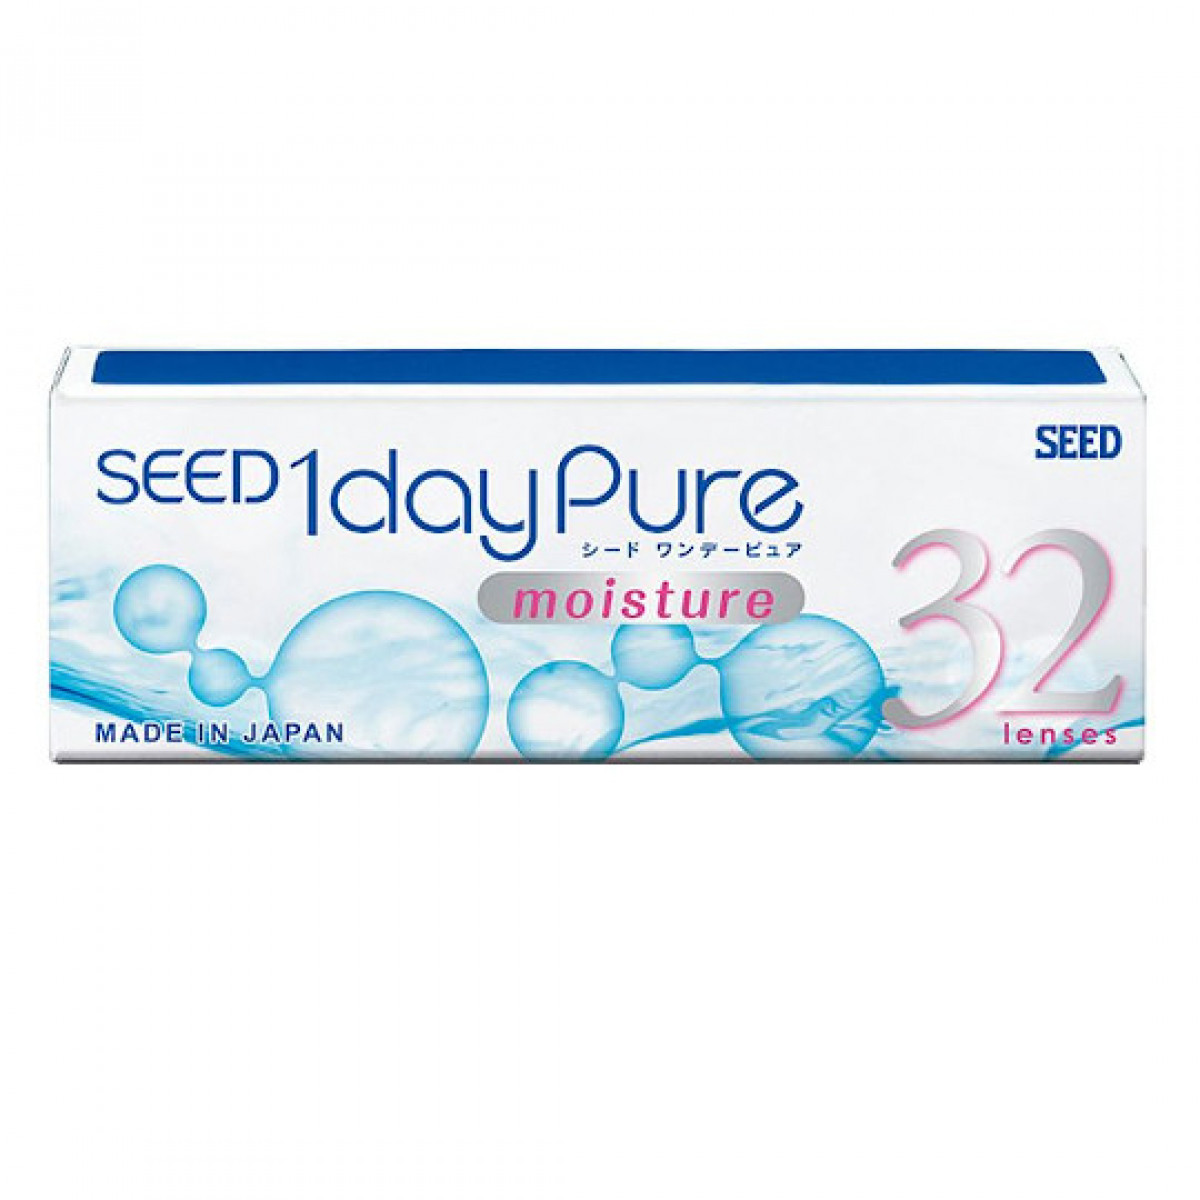 Контактные линзы SEED 1 day Pure moisture 32 линзы, R 8.8 SPH -6.50 однодневные прозрачные